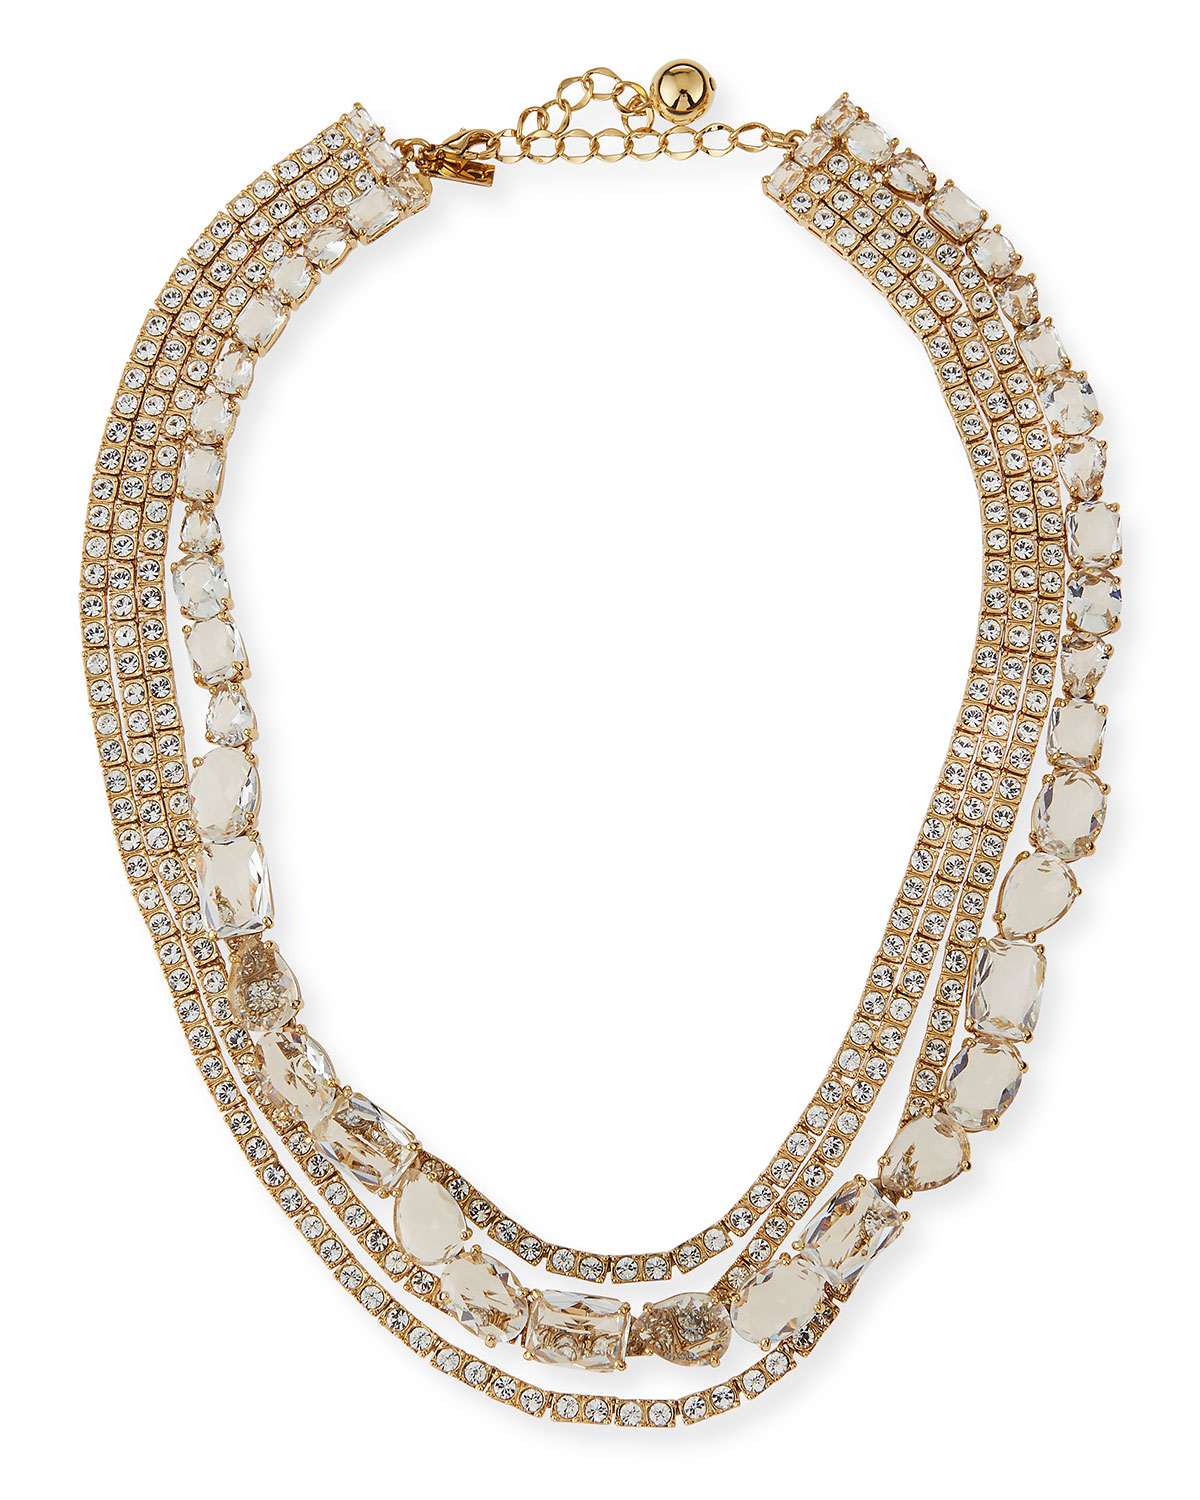 Lyst - Kate Spade New York Draped Jewel Multi-Strand Necklace